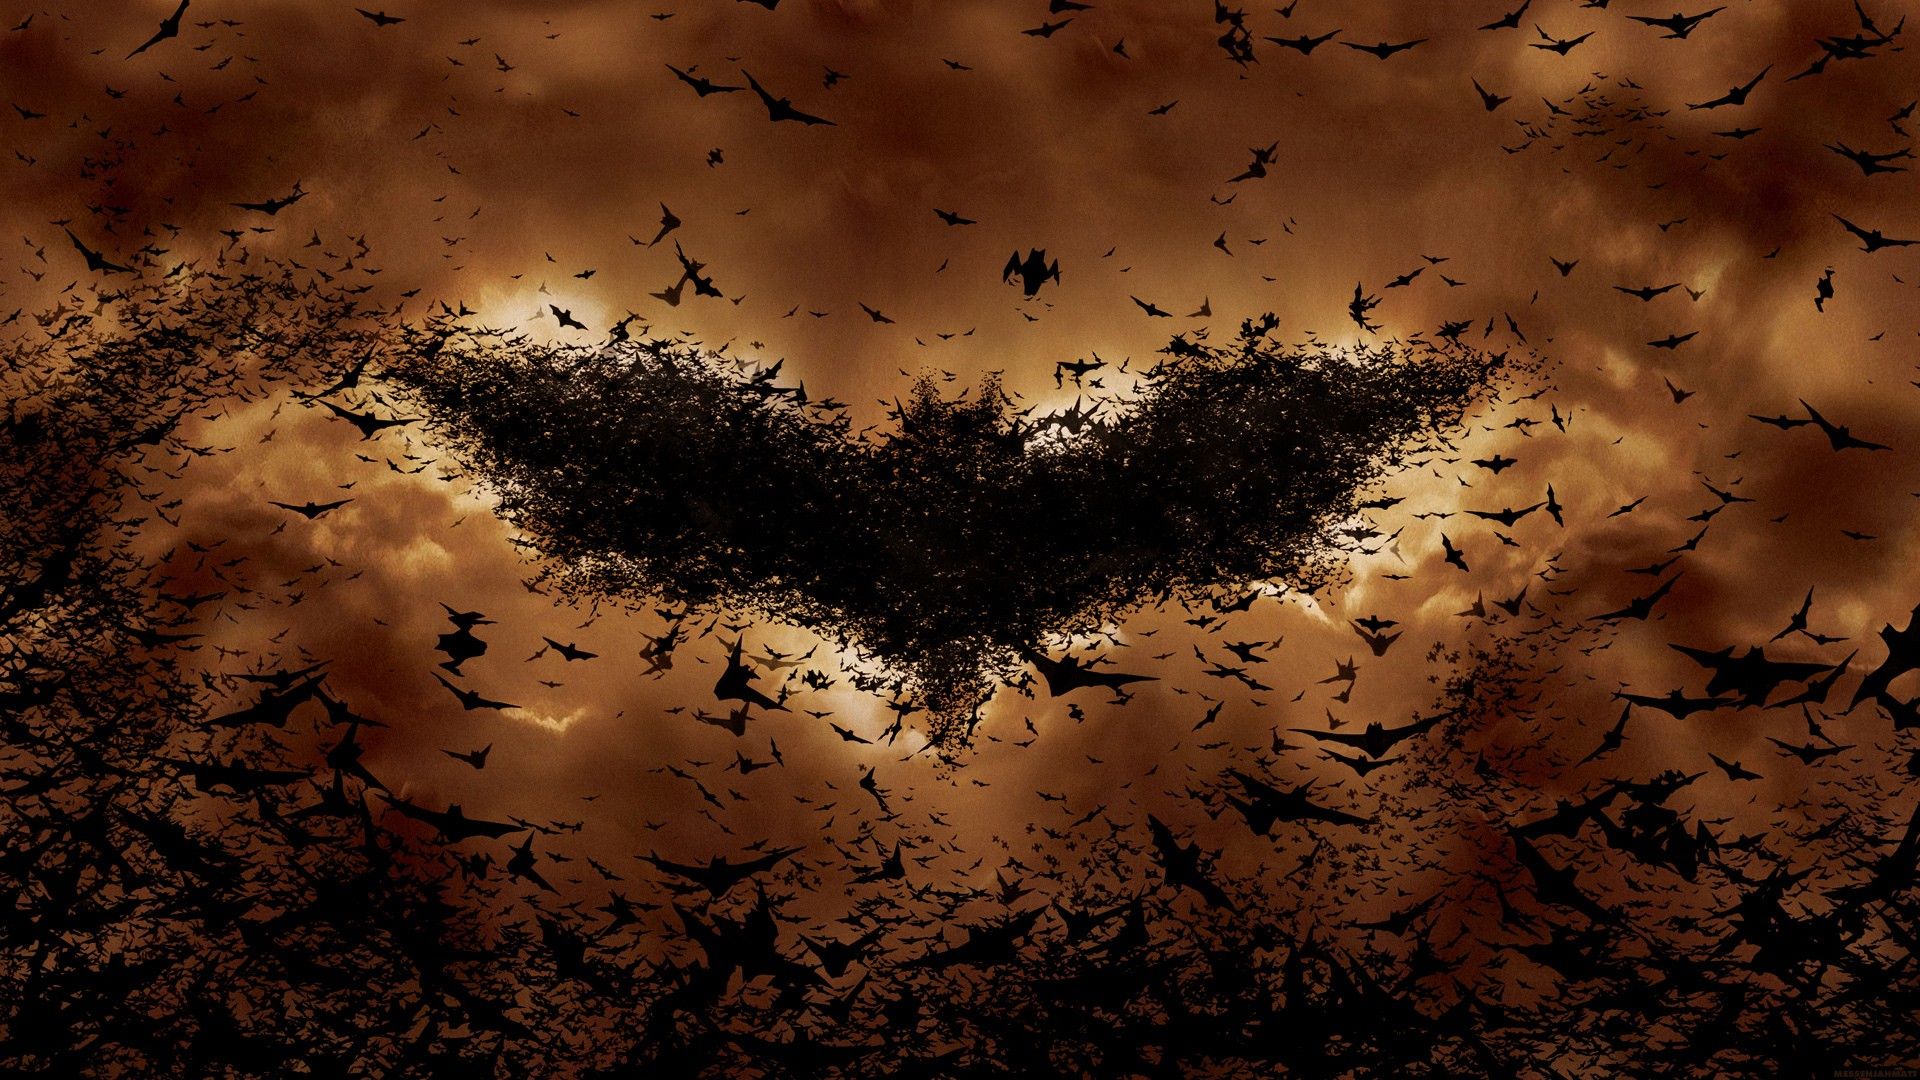 Bat HD Wallpaper | Bat Image Free | Cool Wallpapers